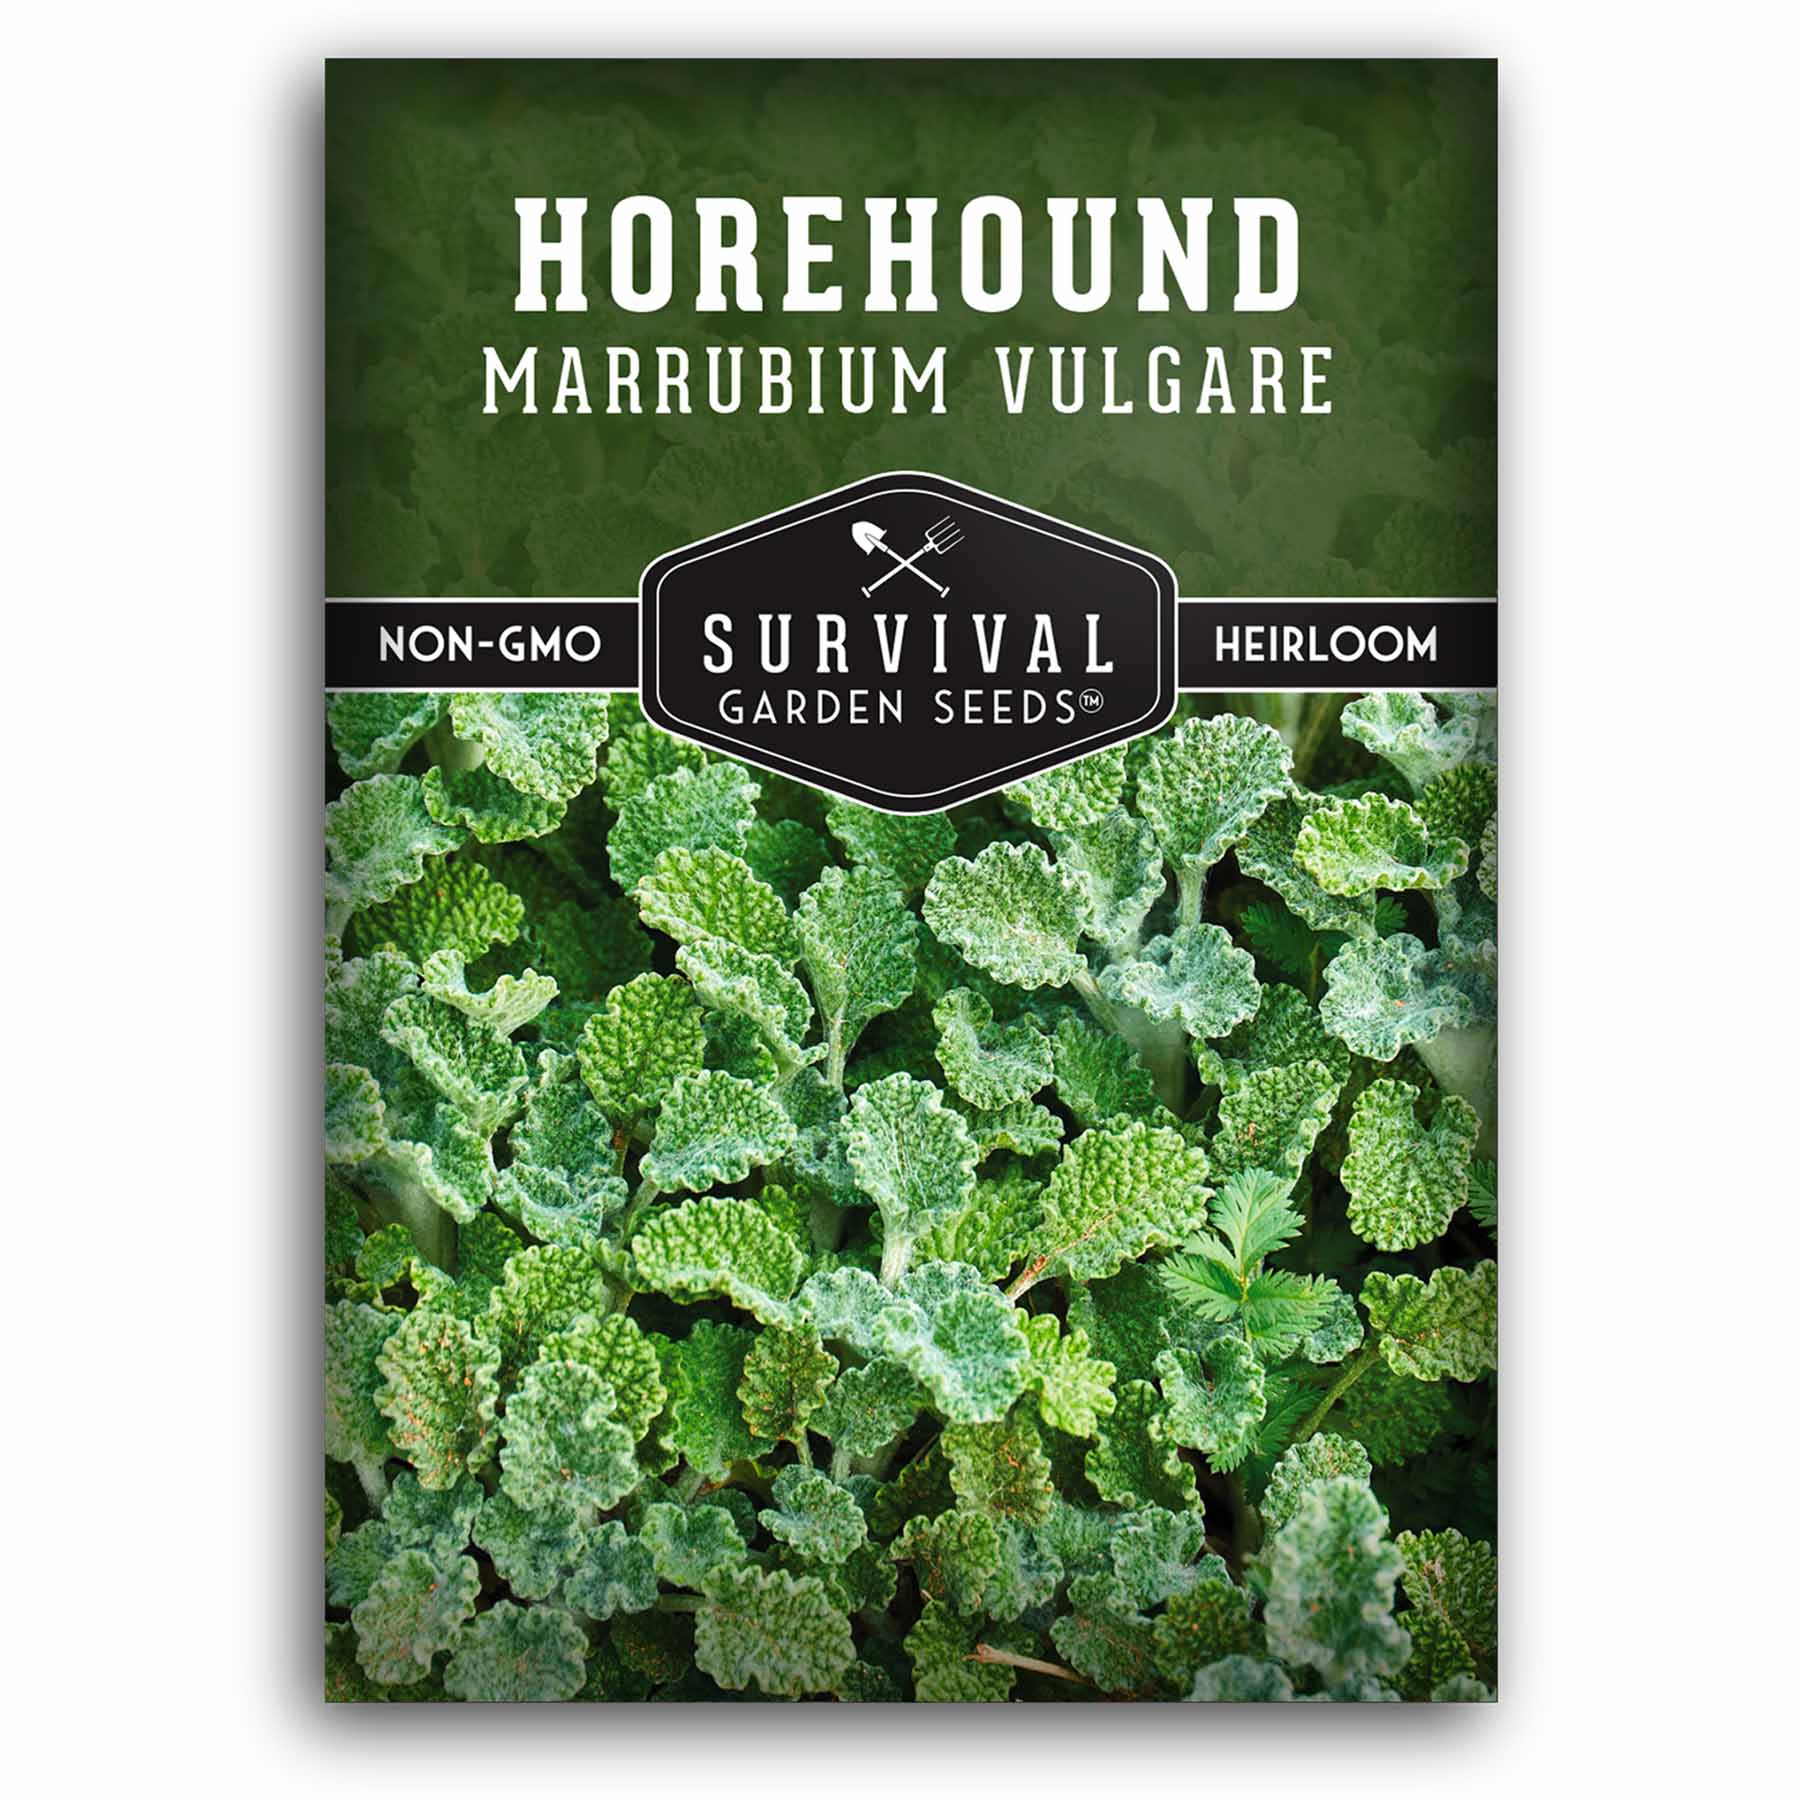 1 packet of Horehound seeds